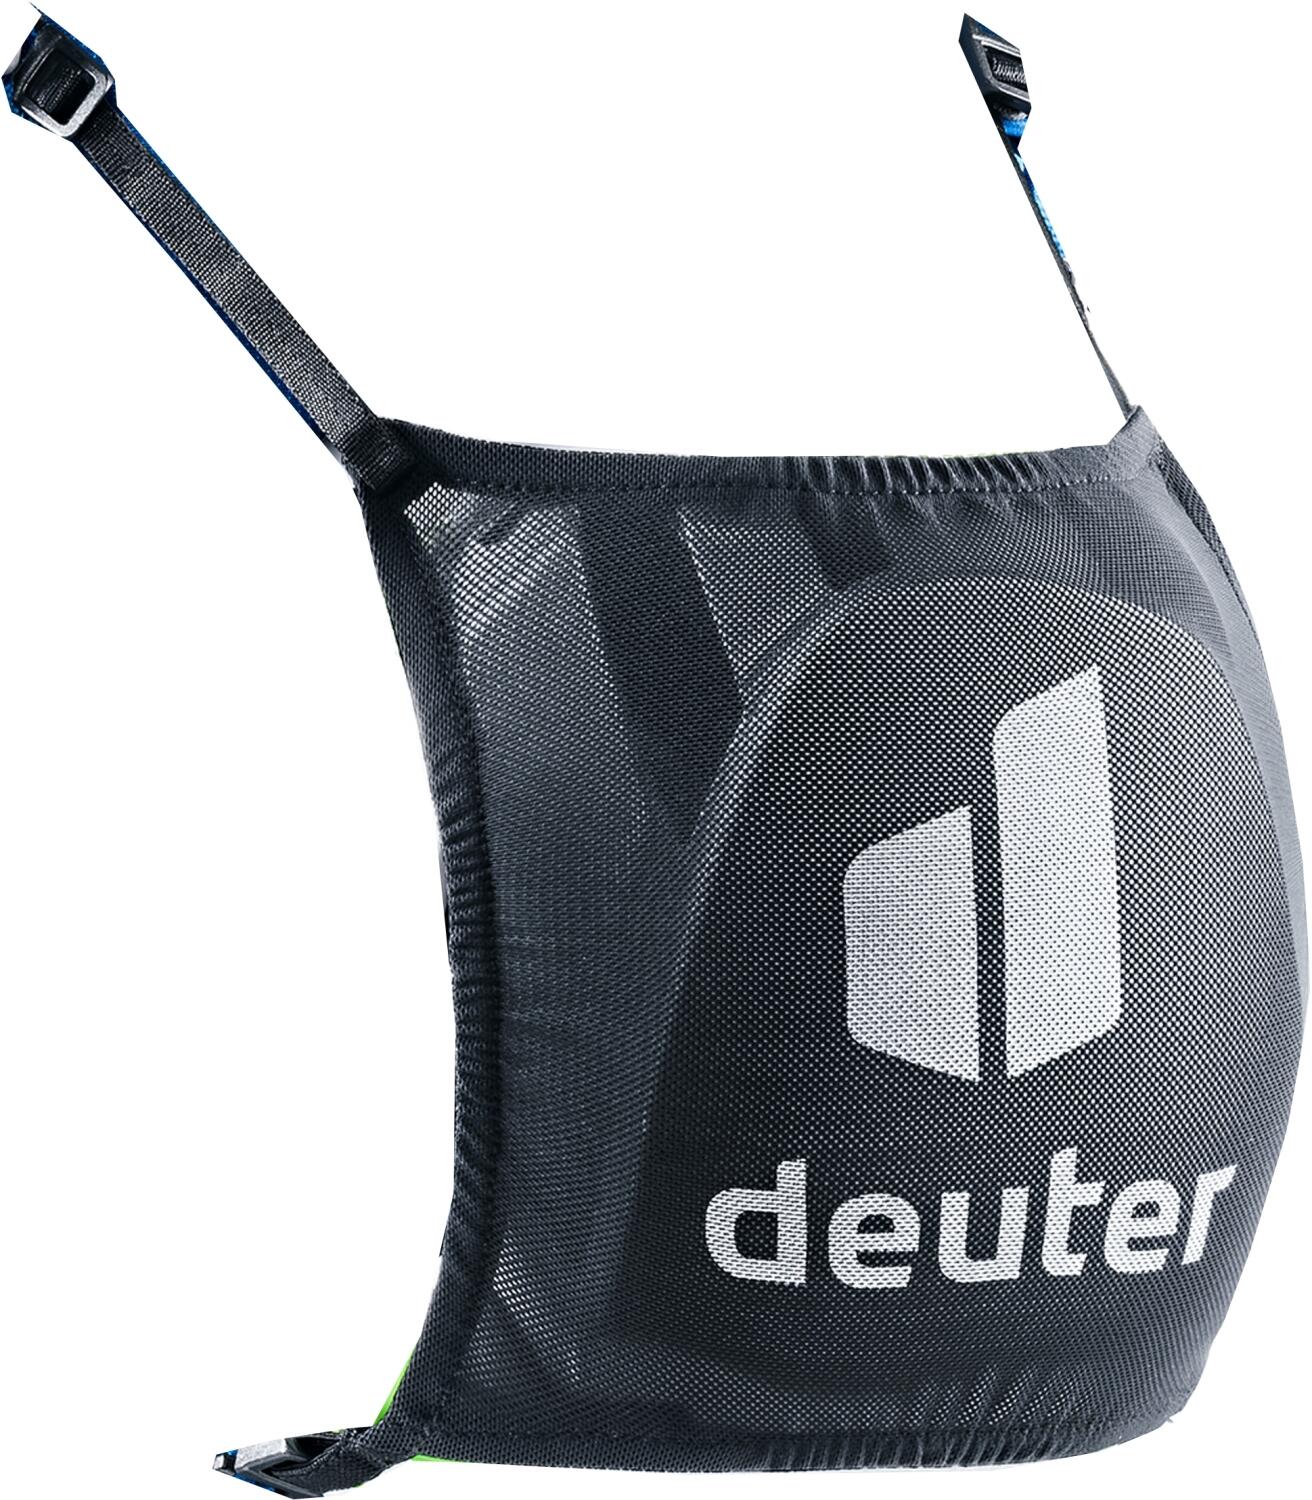 Deuter Helmhalter (7000 black)